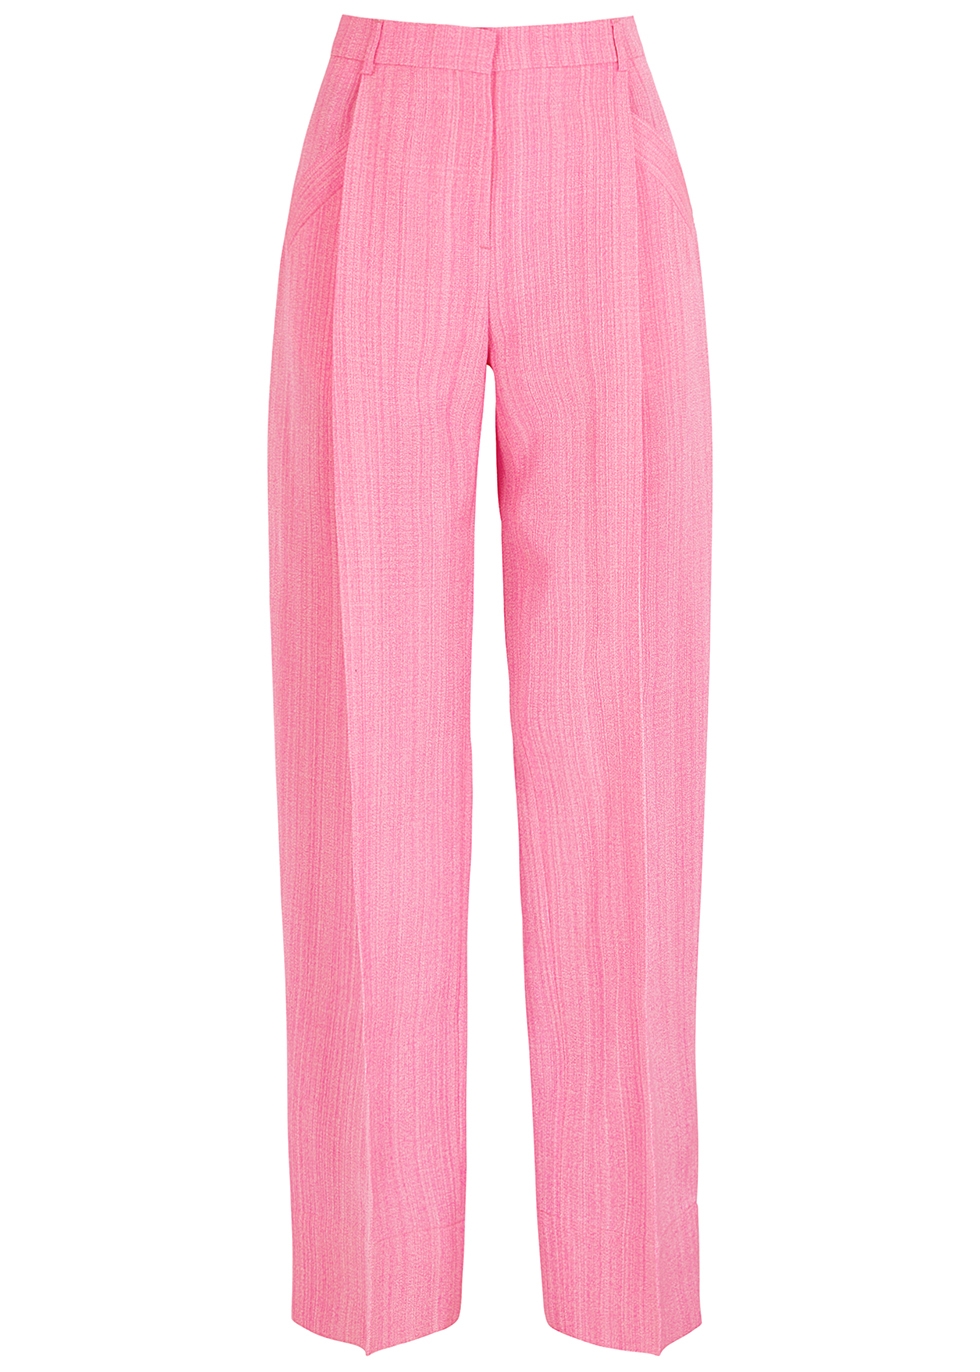 Jacquemus Le Pantalon Loya pink wide-leg trousers - Harvey Nichols